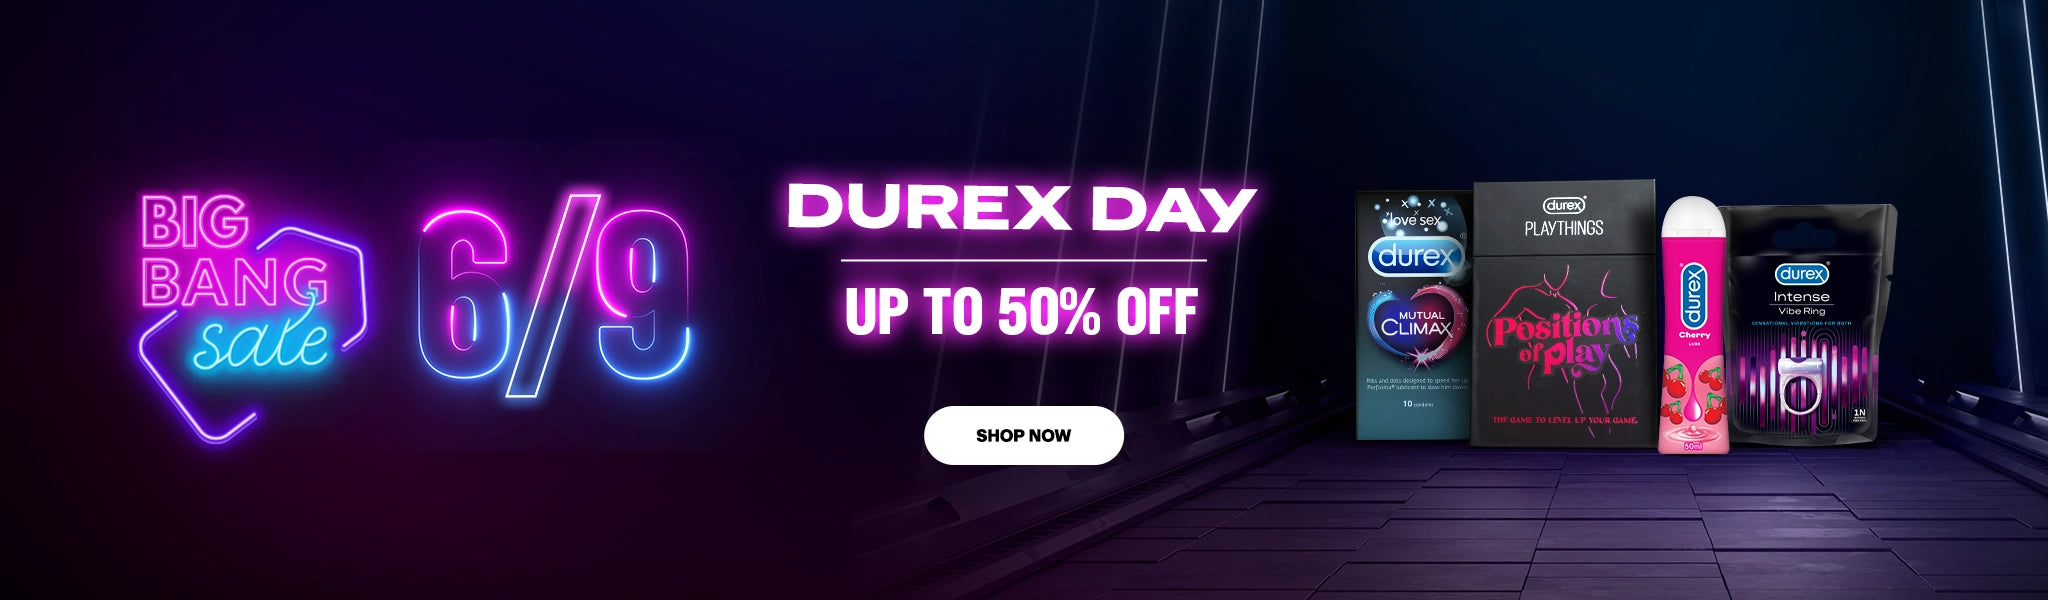 Durex Banner Desktop